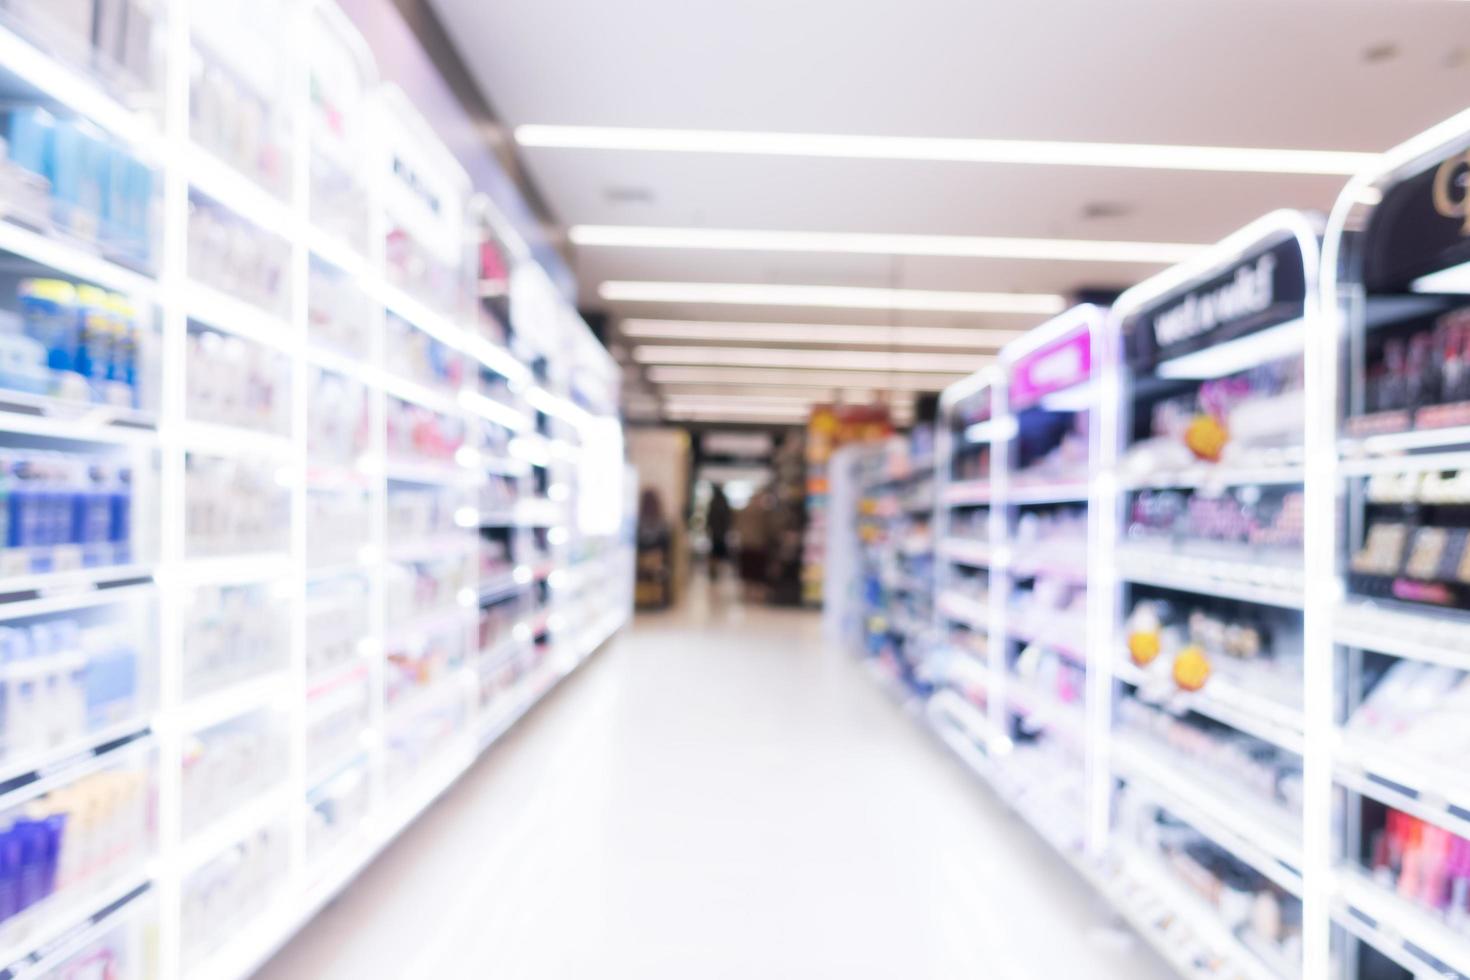 Abstract blur supermarket photo